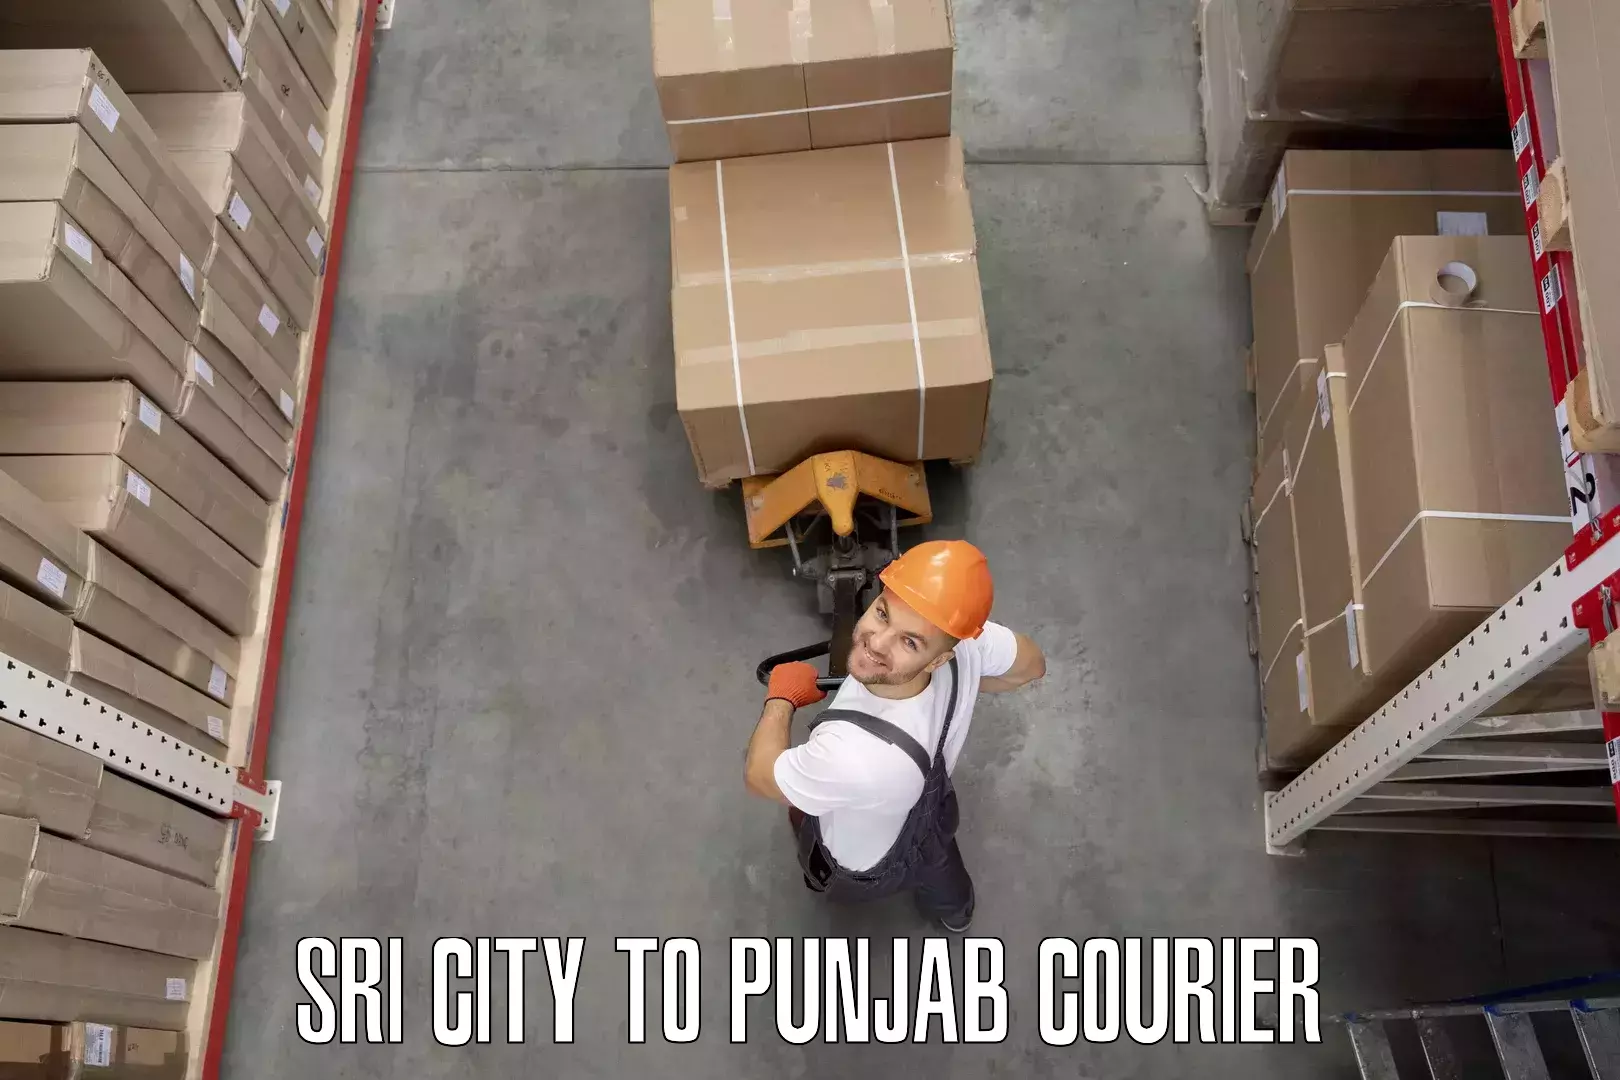 Furniture moving experts Sri City to Punjab